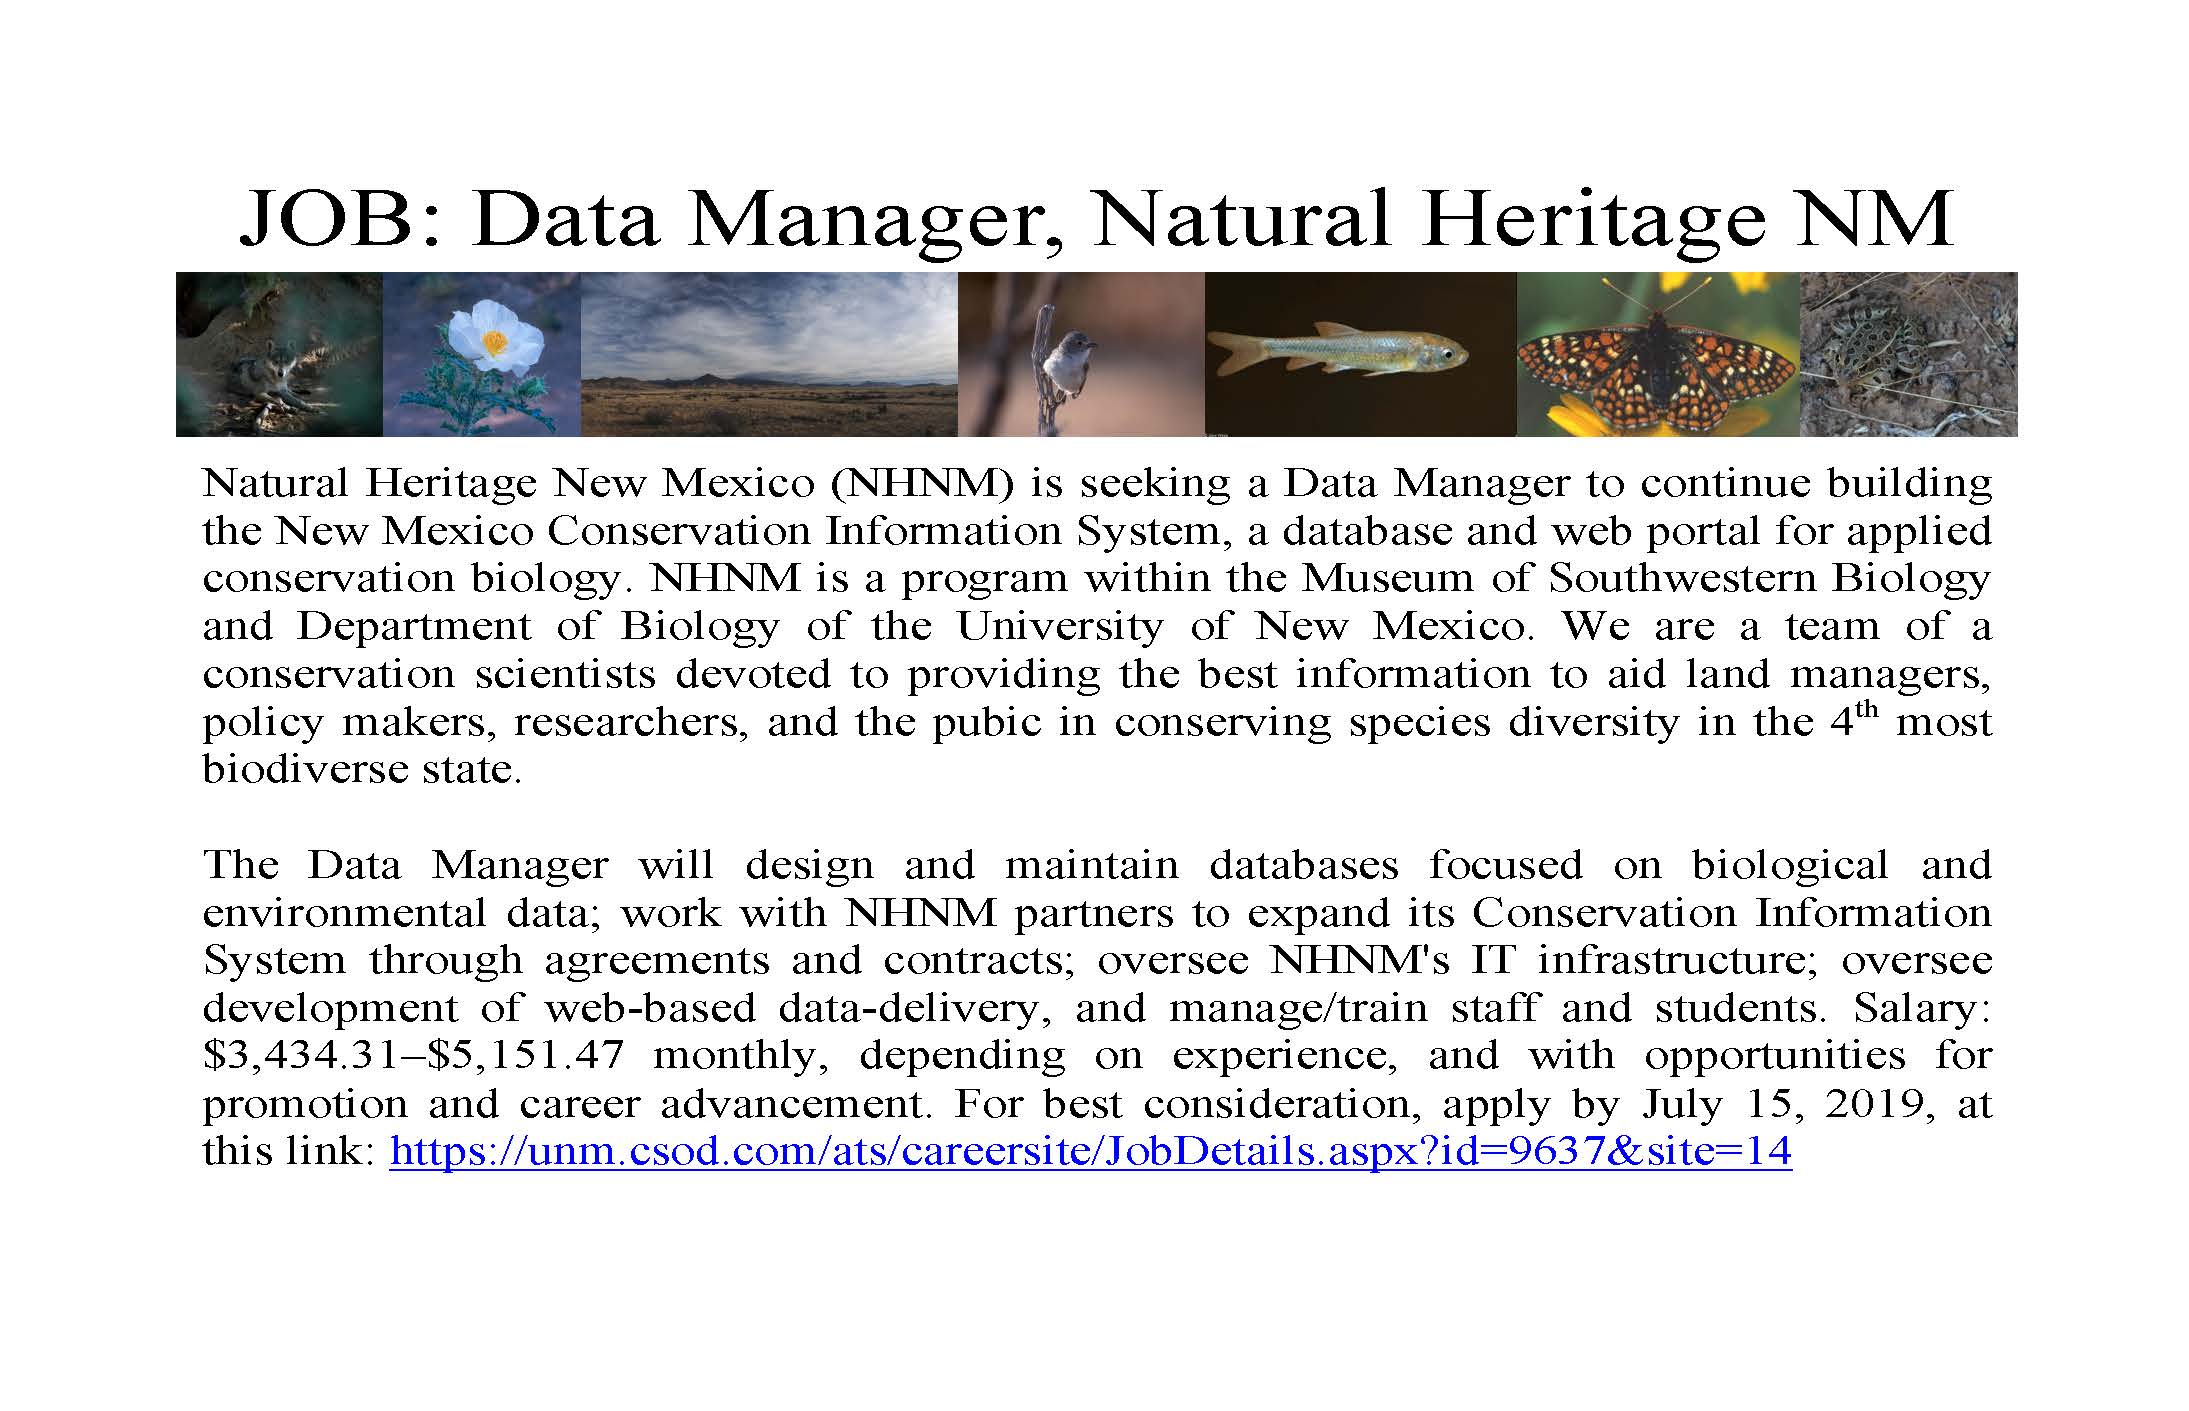 07.08.2019_natural-heritage-new-mexico-data-manager-job-description.jpg